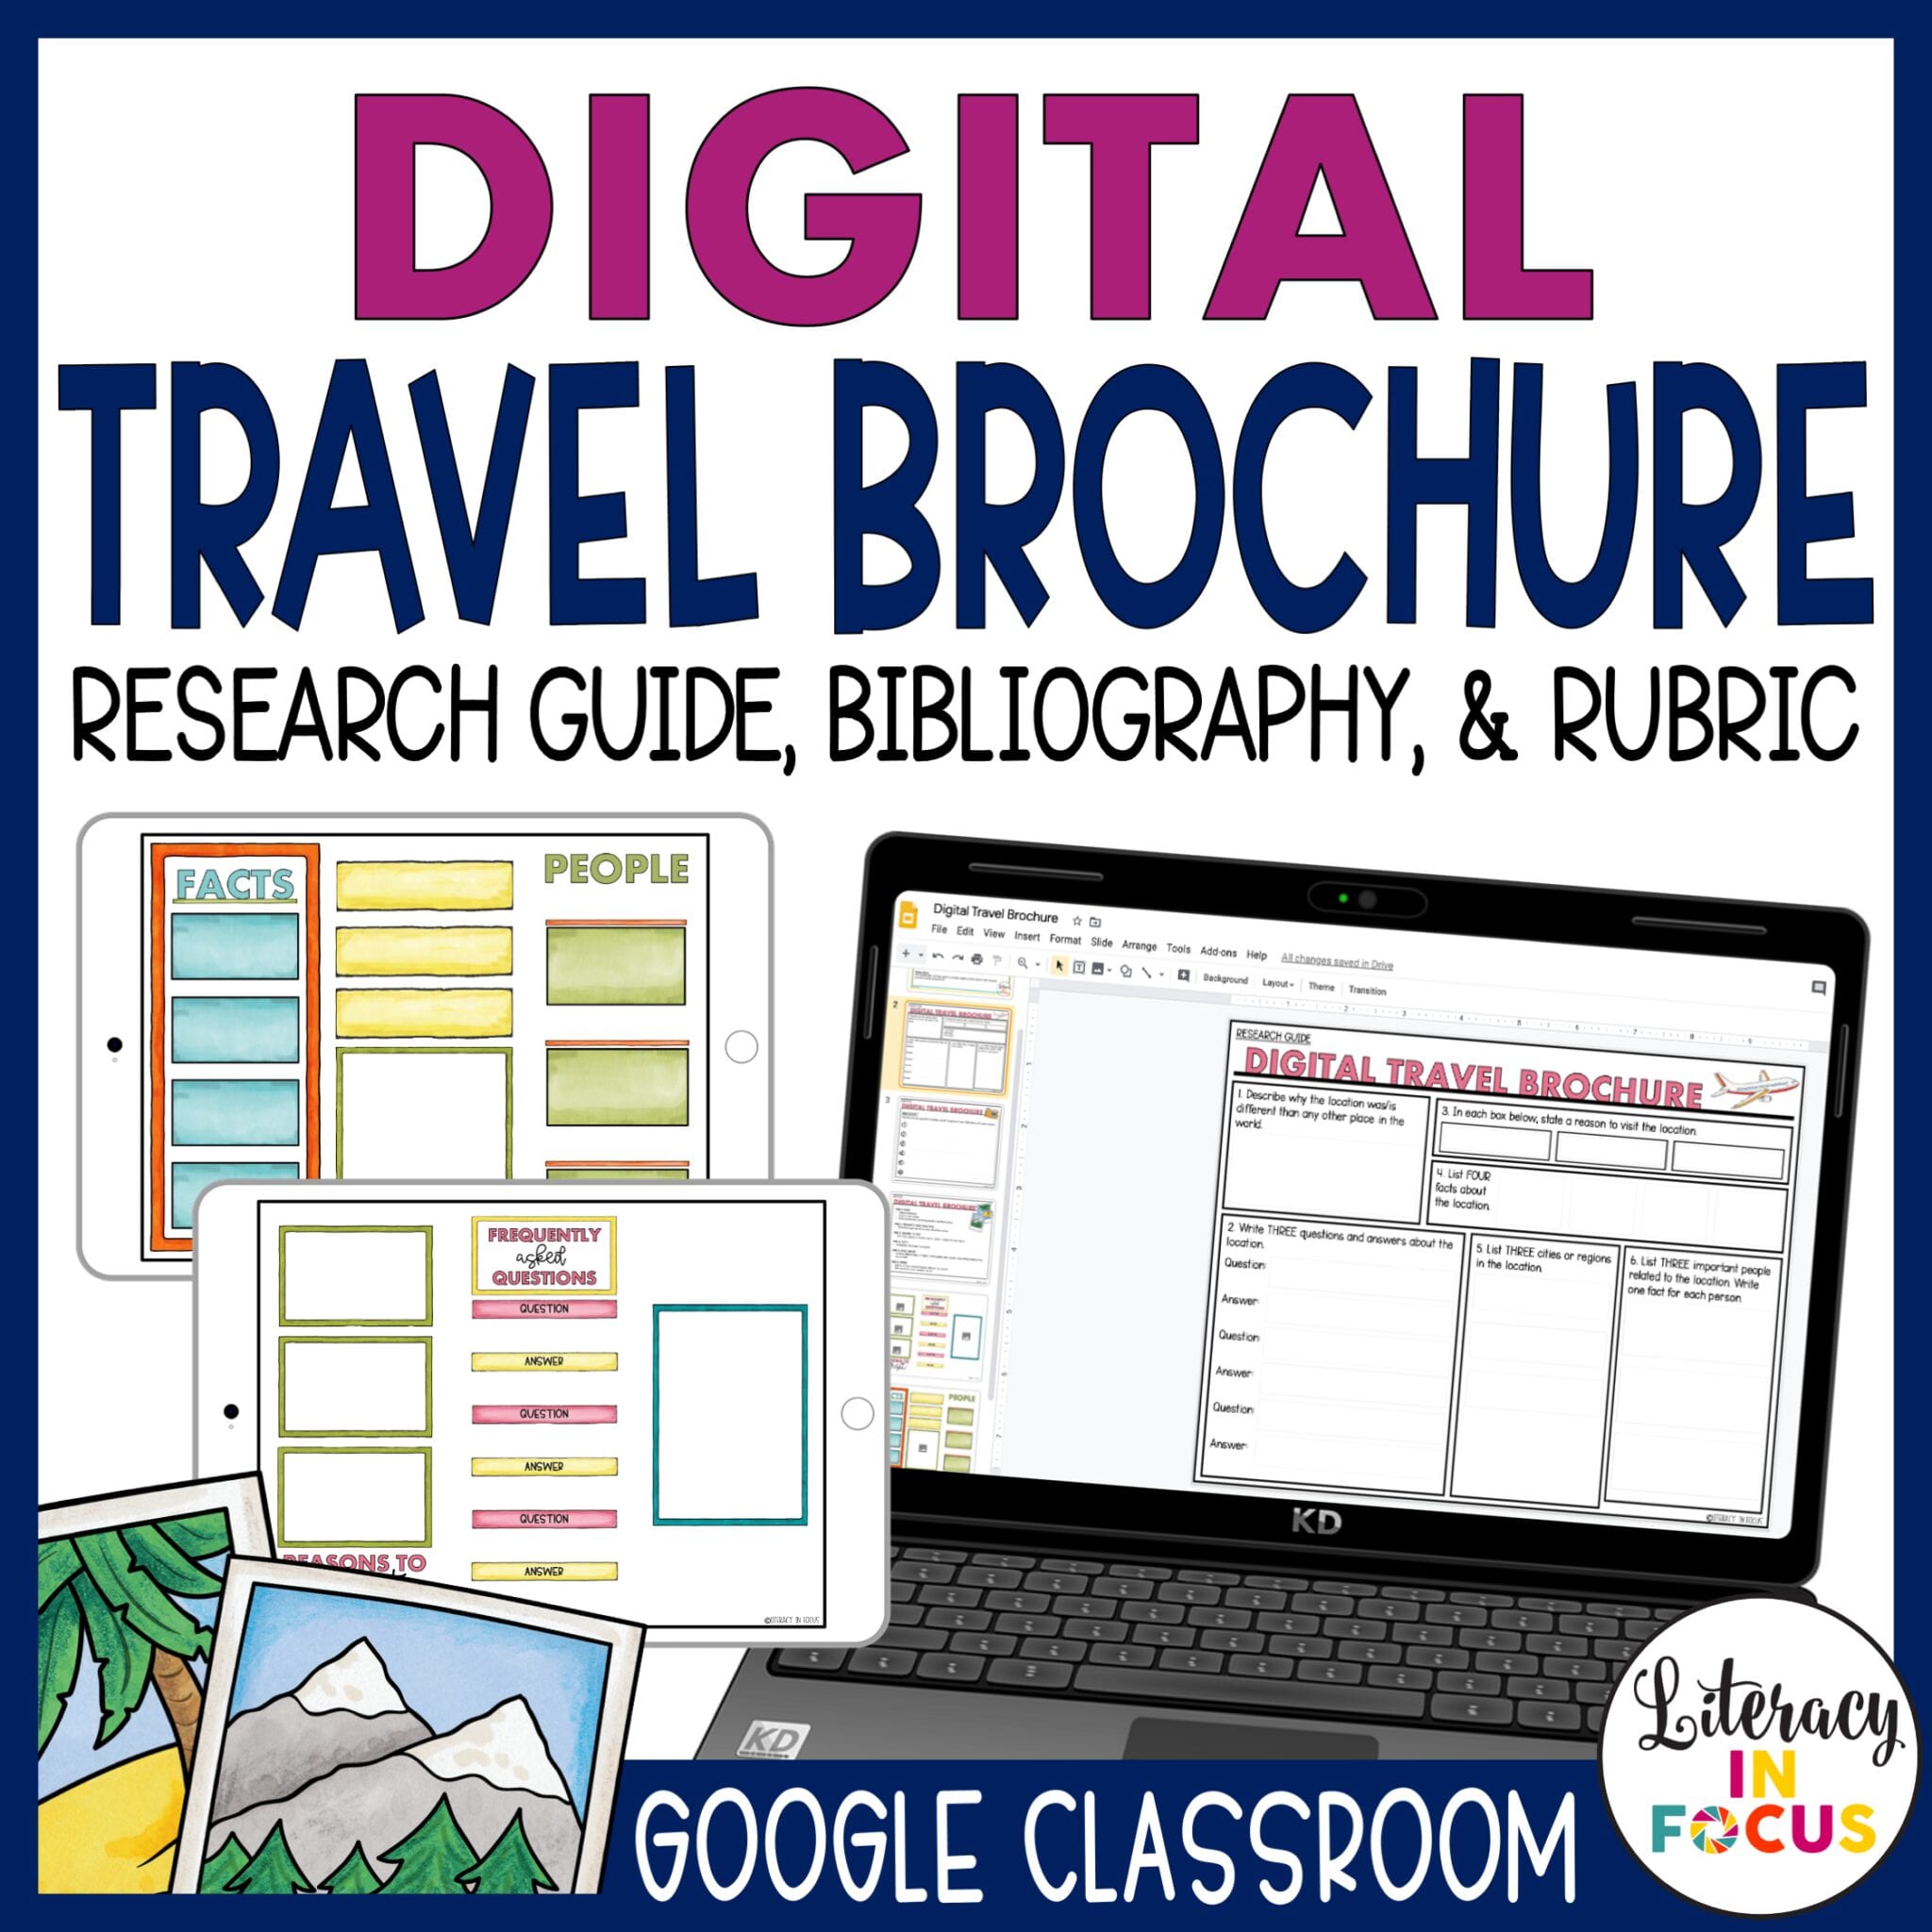 Digital Travel Brochure for Google Classroom